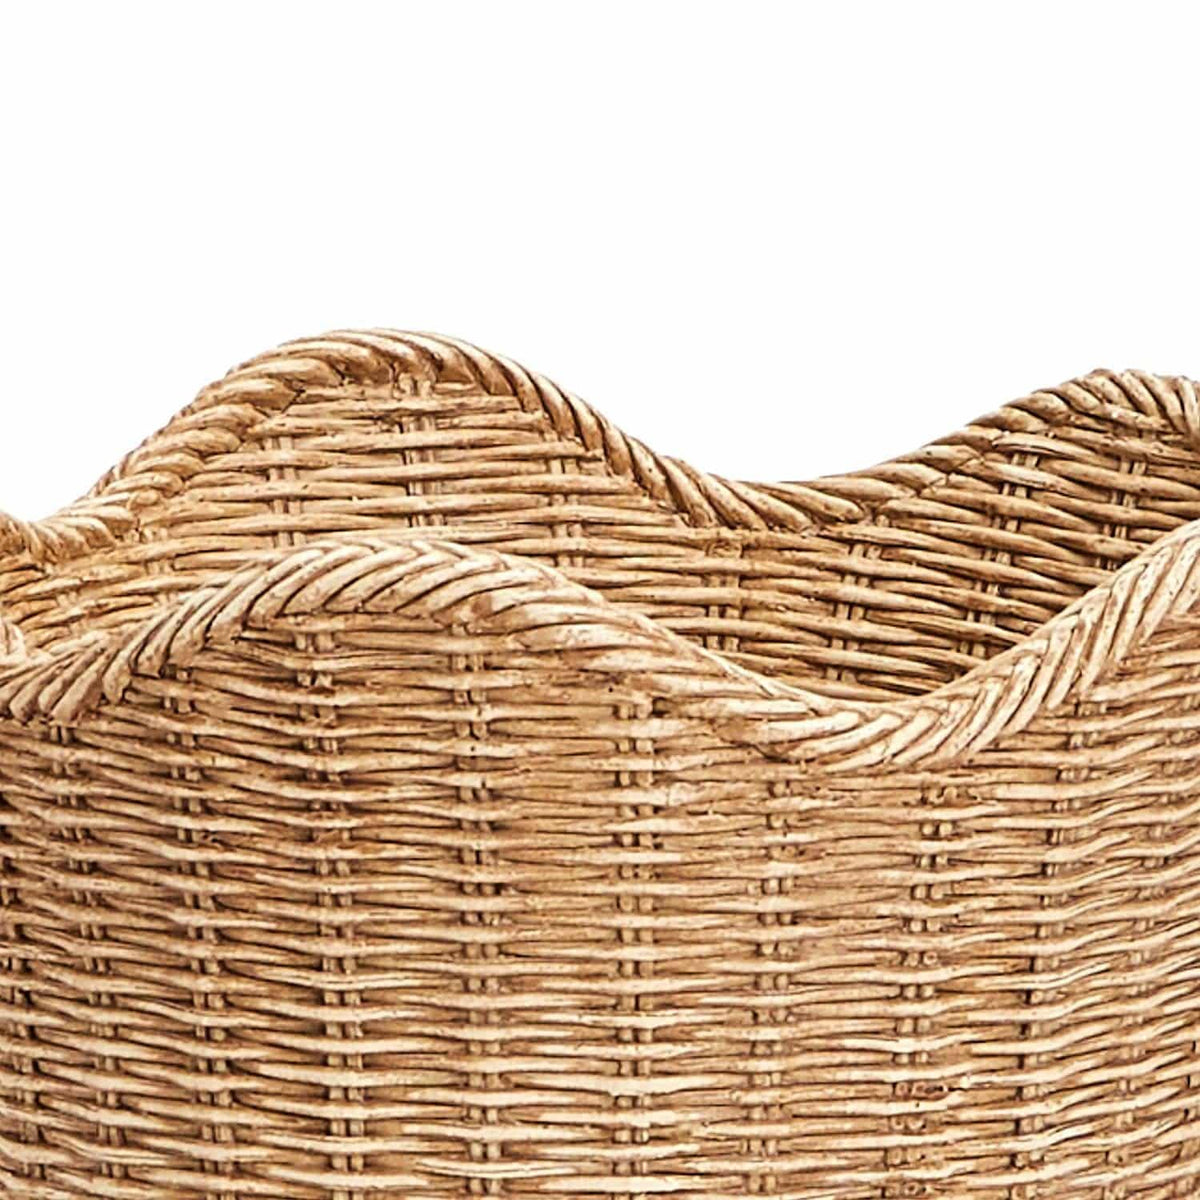 Scalloped Edge Basket Weave Pattern Cachepot - Resin - The Preppy Bunny